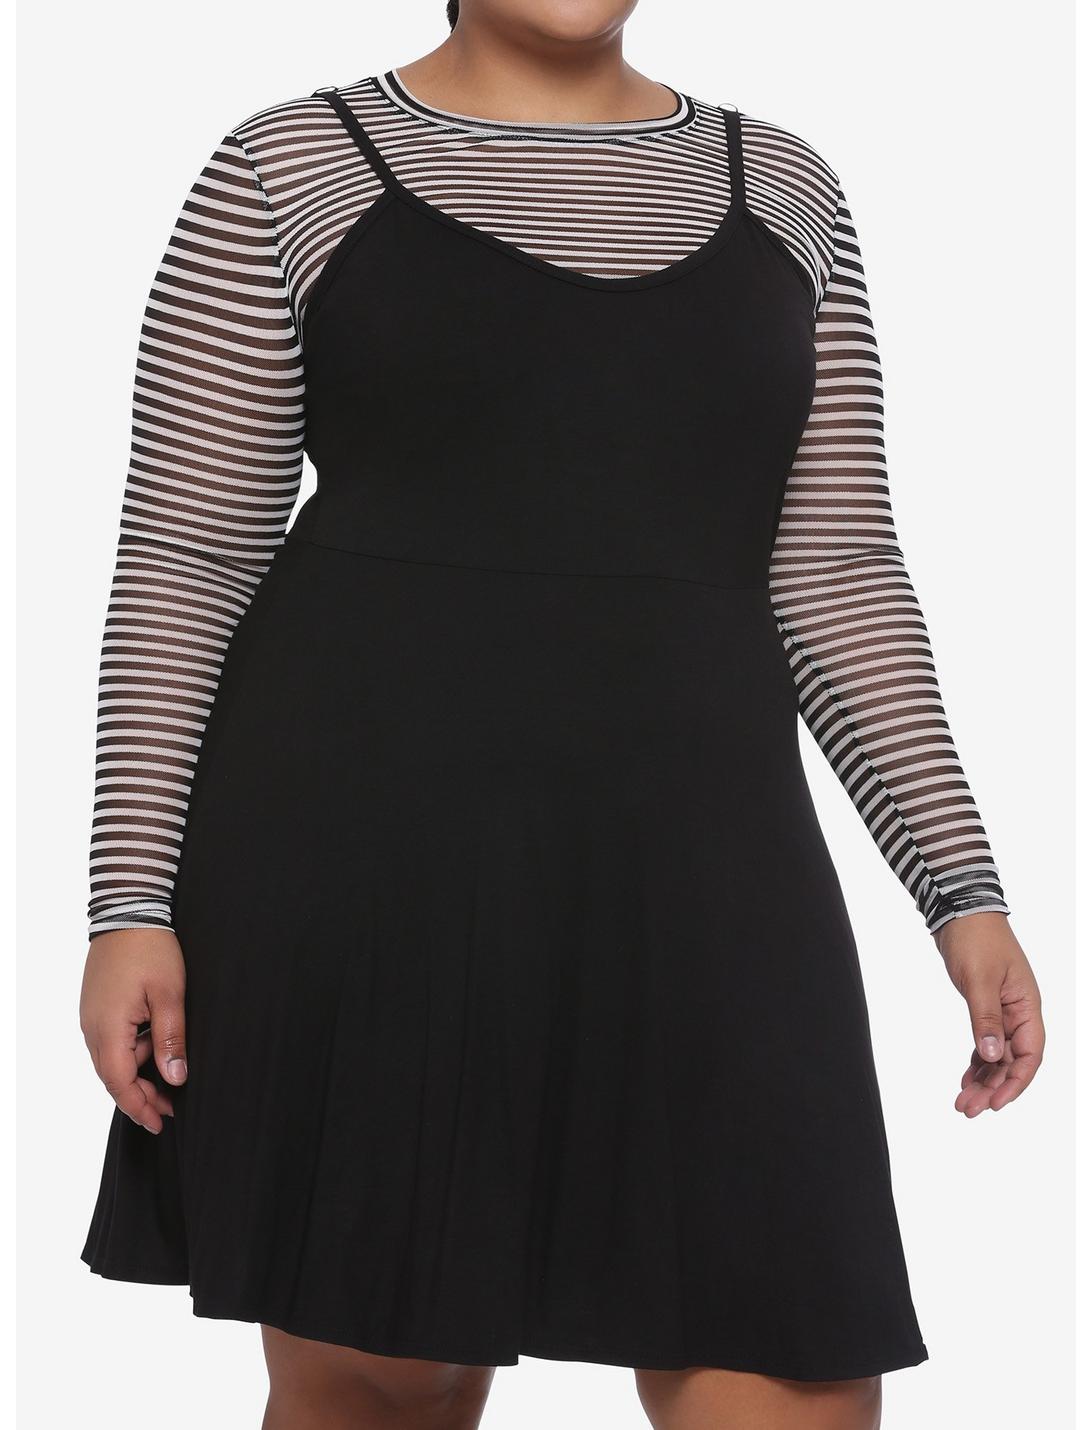 Striped Mesh Layered Dress Plus Size, STRIPE-BLACK WHITE, hi-res